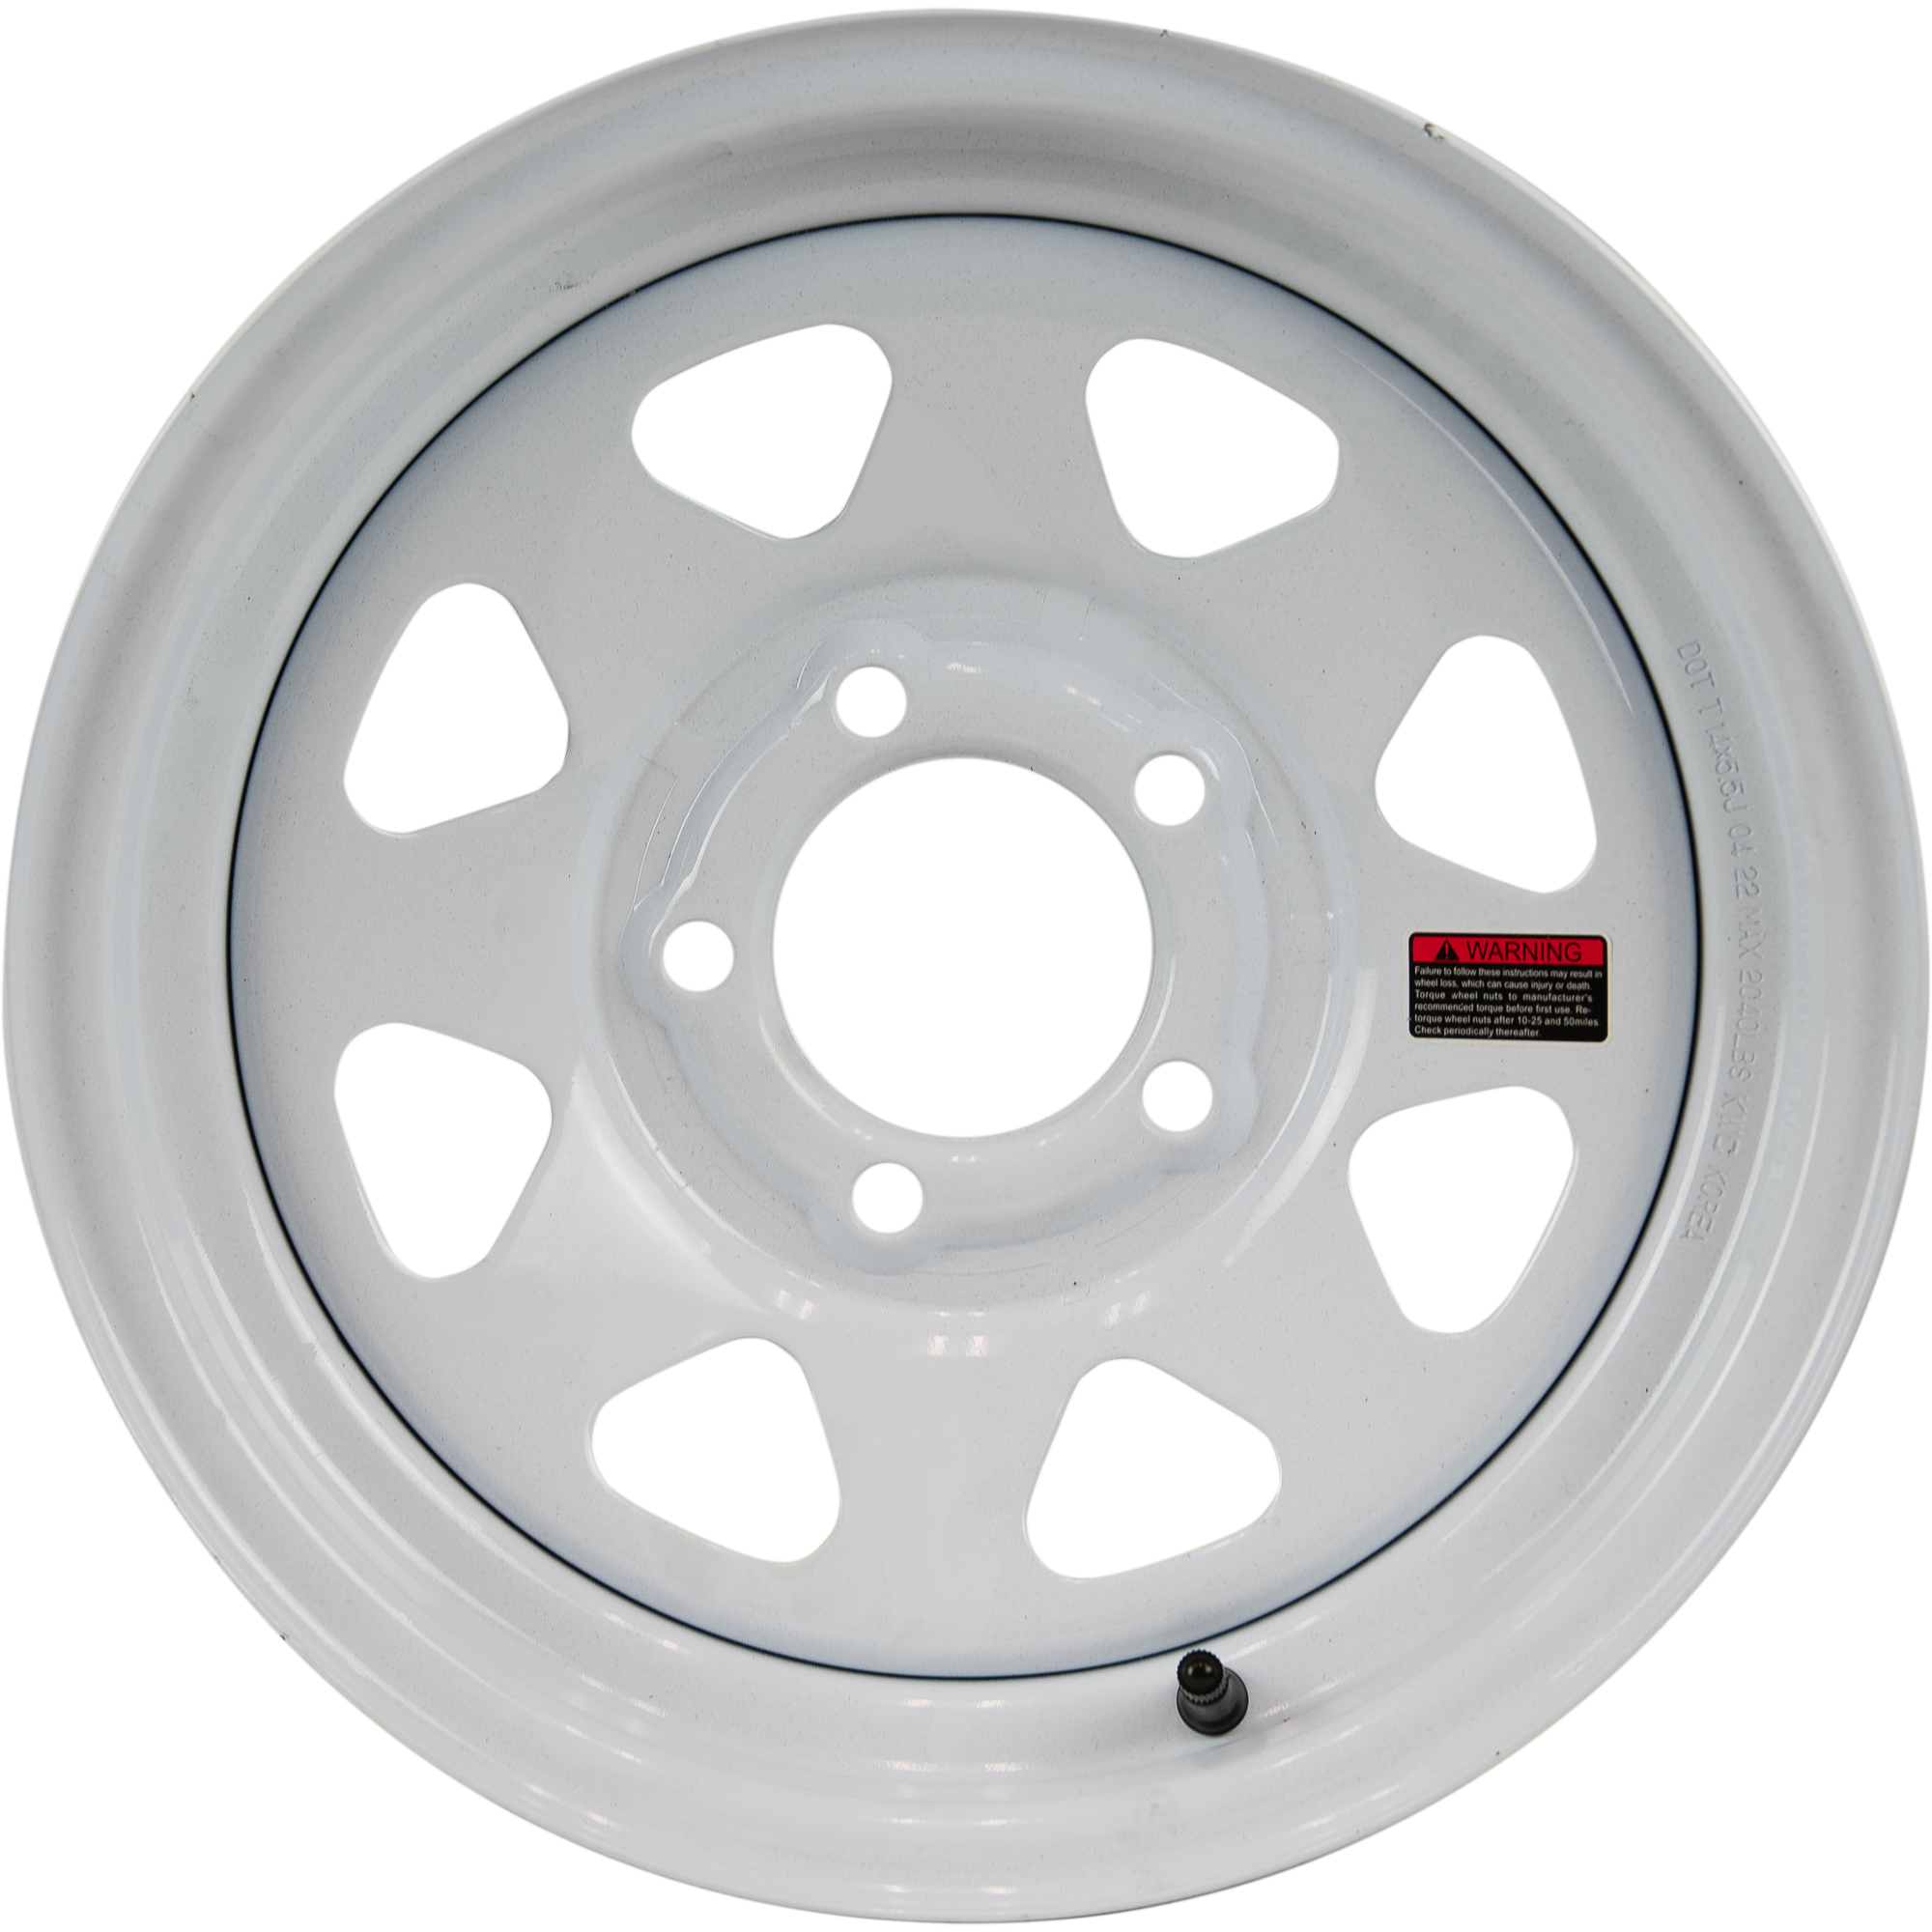 HI-RUN, Steel Wheel for Highway Trailer, Tire Size 14X5.5 5-4.5, Bolt Holes (qty.) 5, Model KW1003